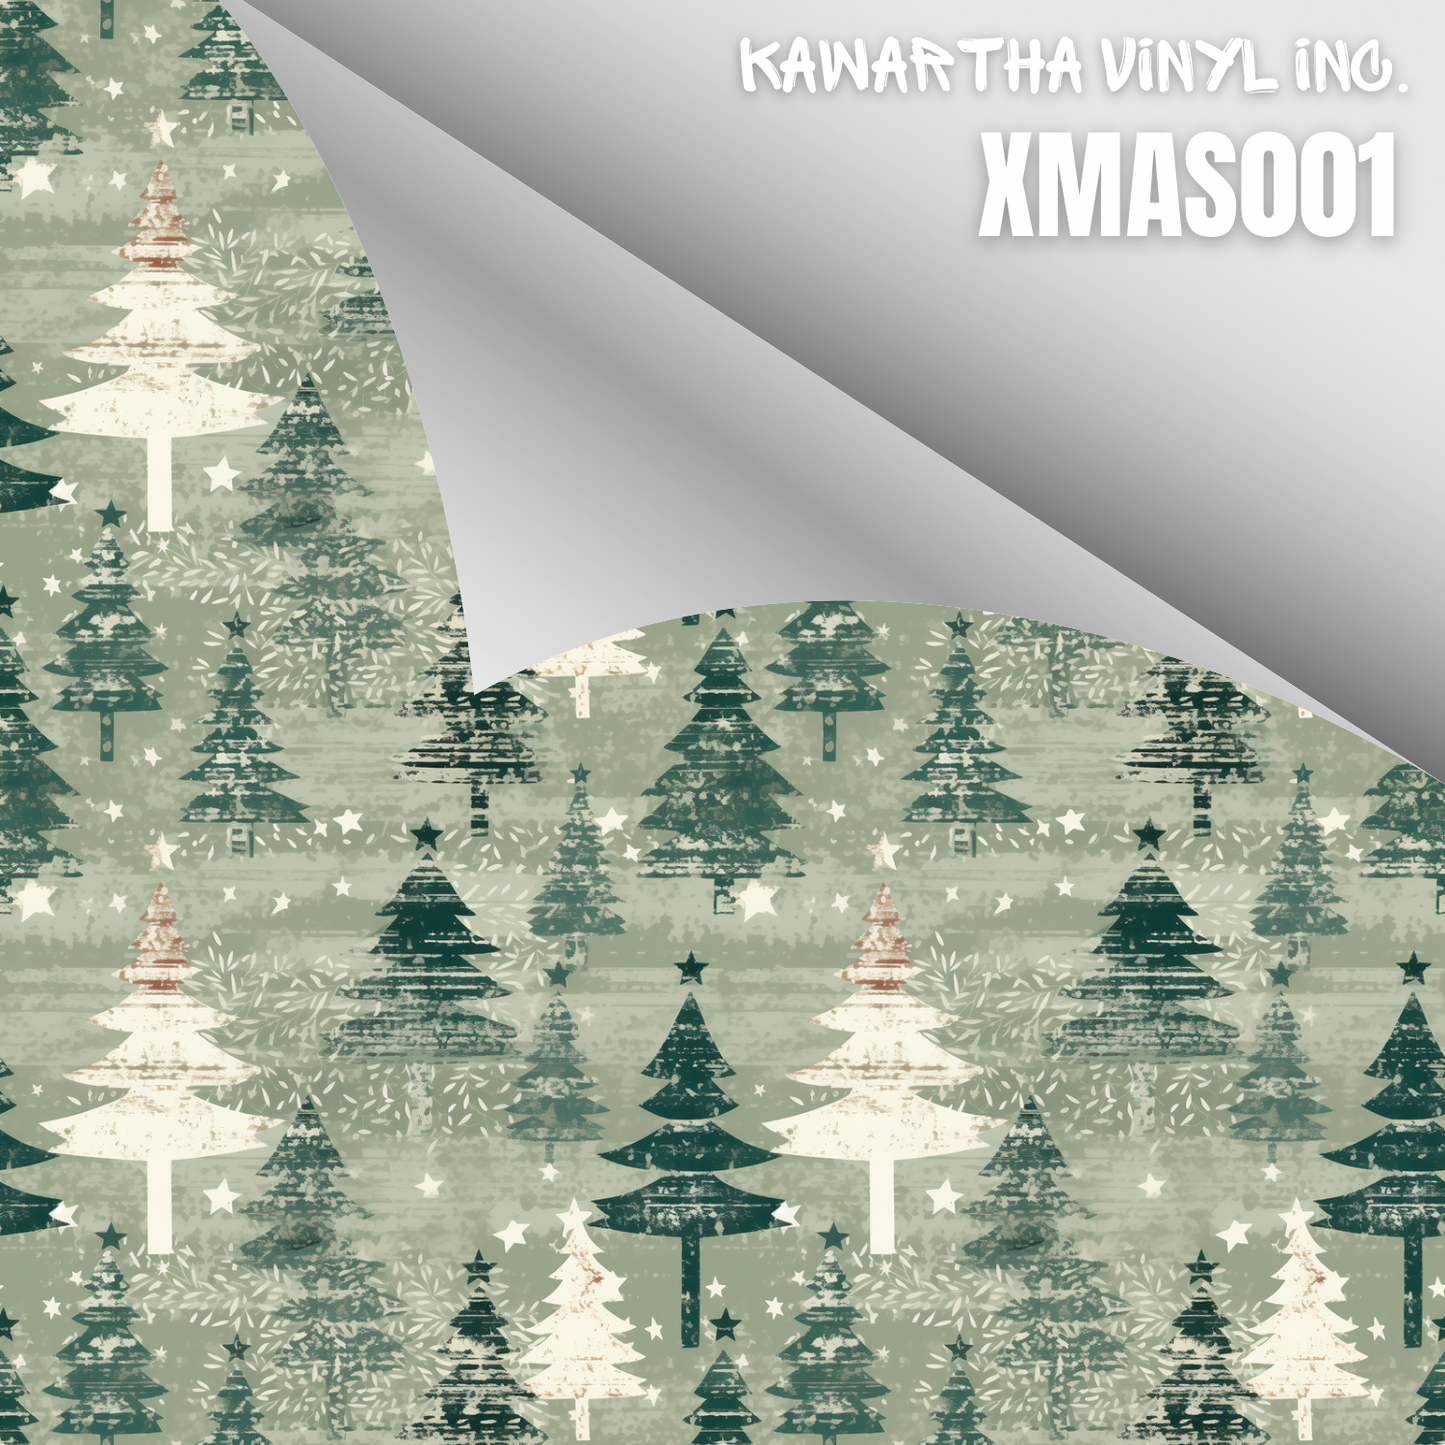 XMAS001 Adhesive & HTV Patterns